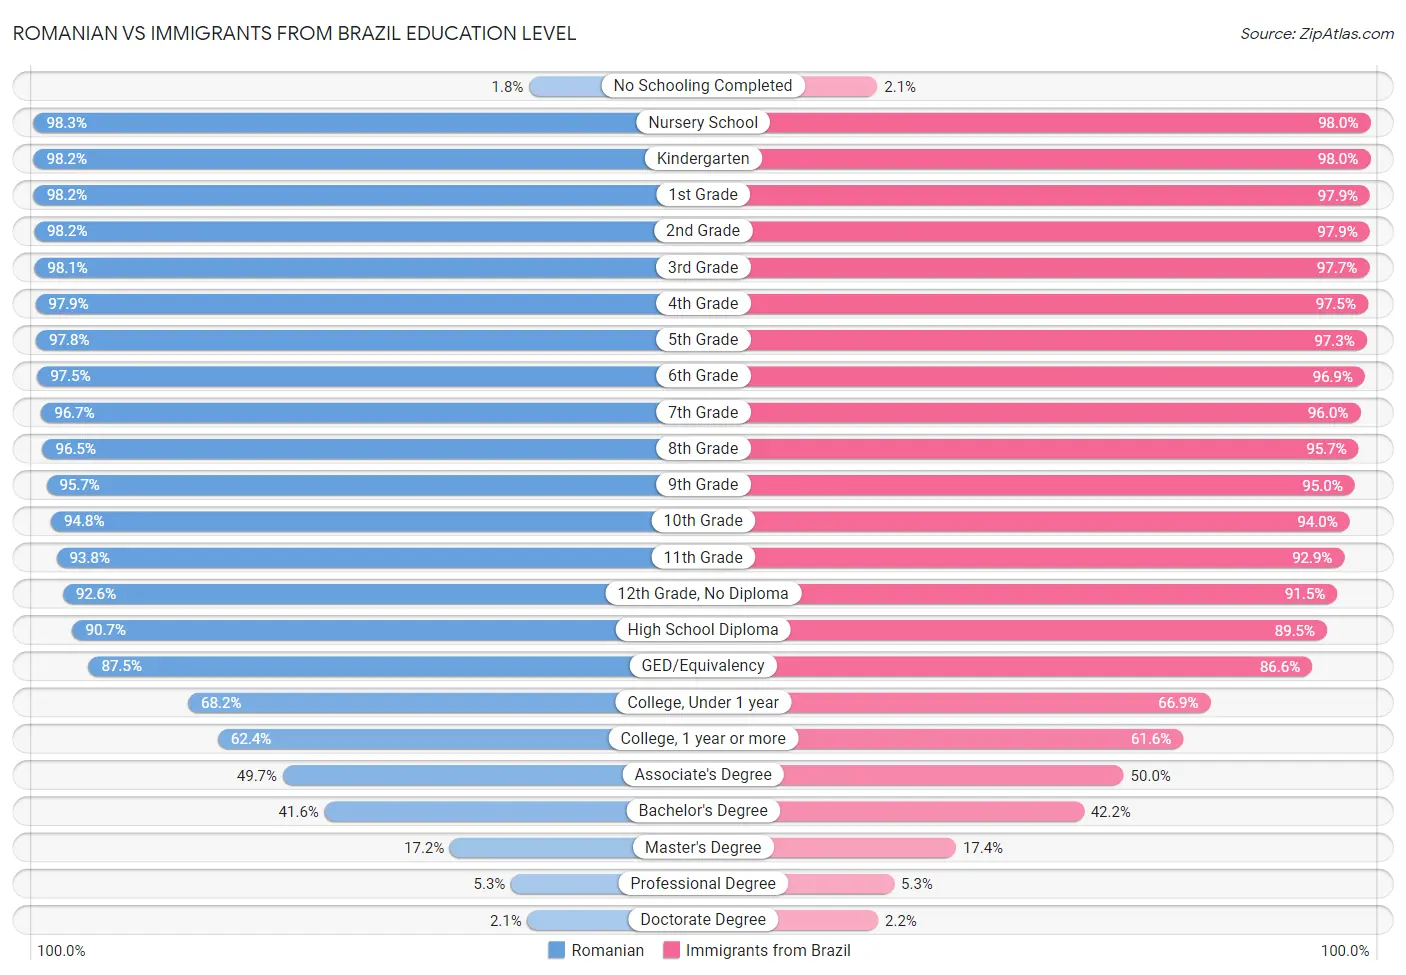 Romanian vs Immigrants from Brazil Education Level